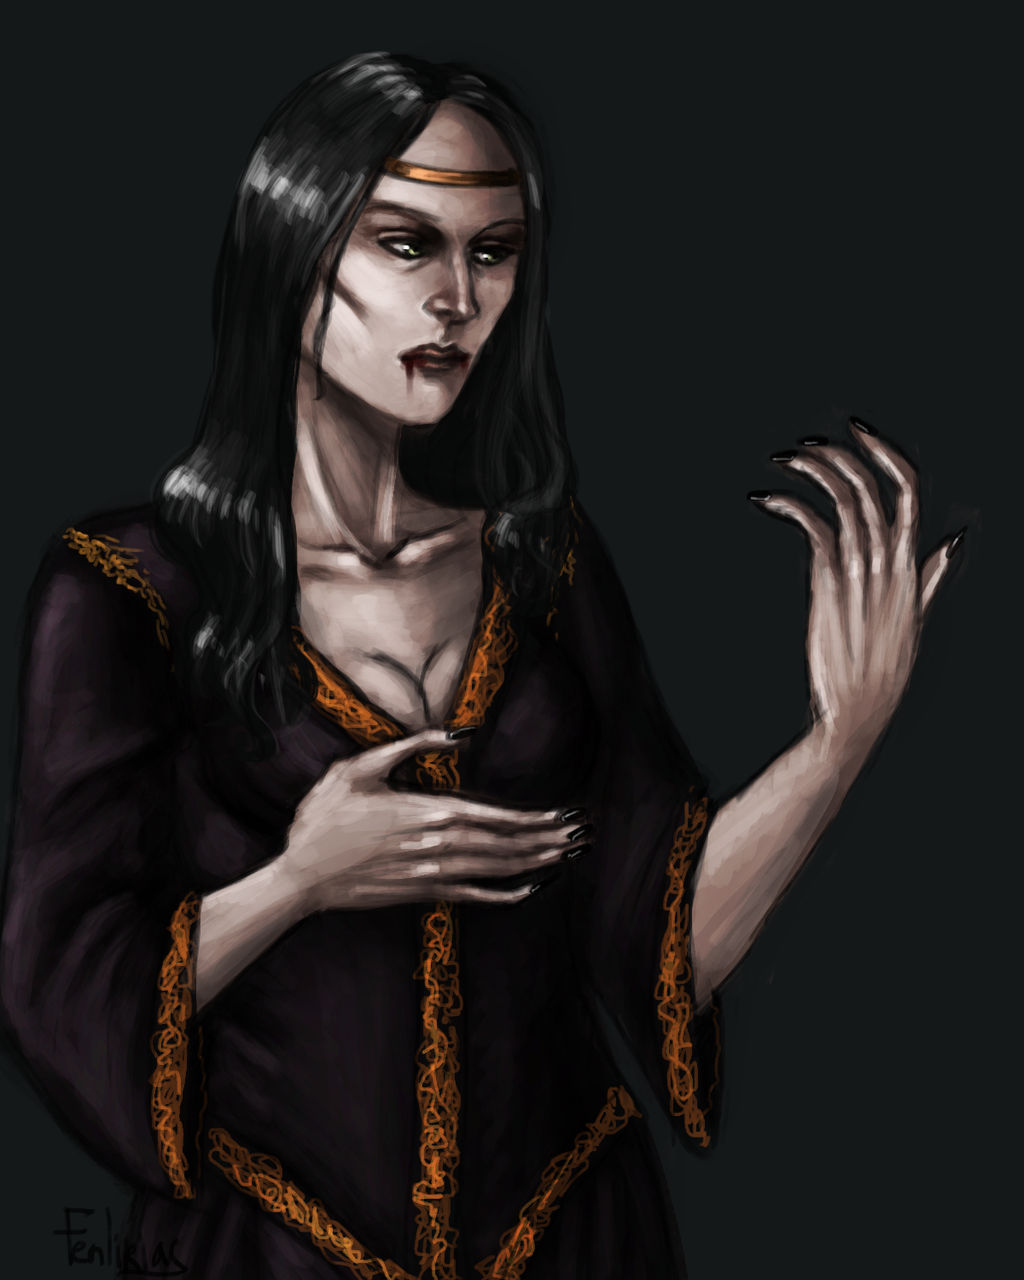 Vampire: The Masquerade - Redemption by BrokenNoah on DeviantArt